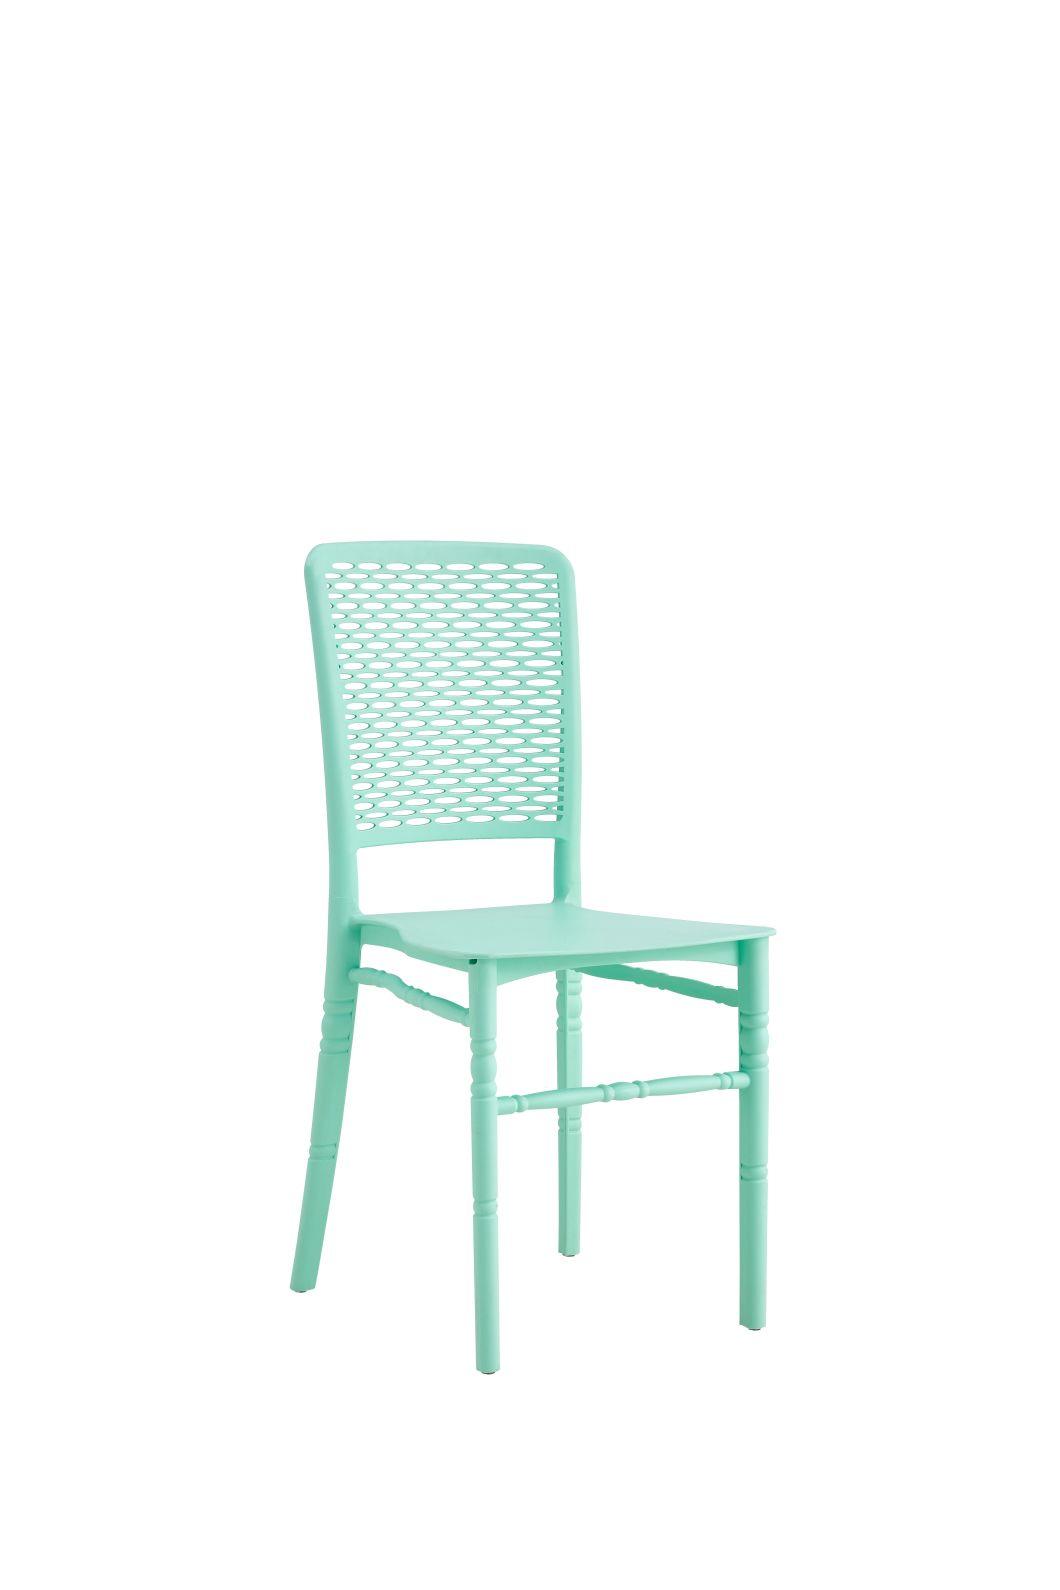 Tb-301 Leisure Design Outdoor Patio Furniture Garden PP Plastic Chairs